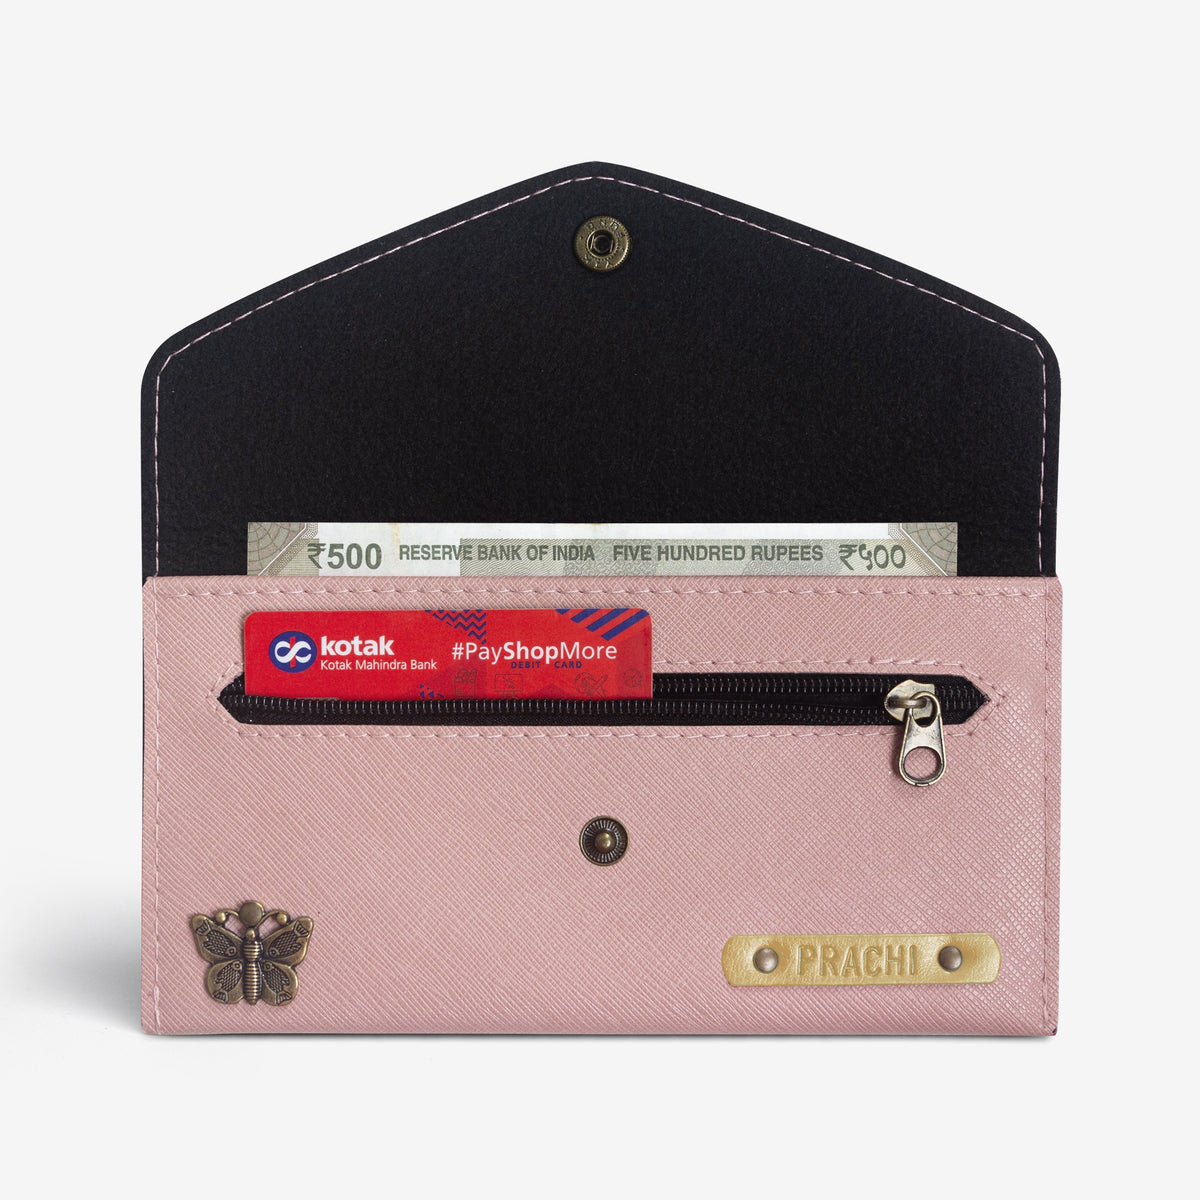 Personalized Women's Wallet - Magenta